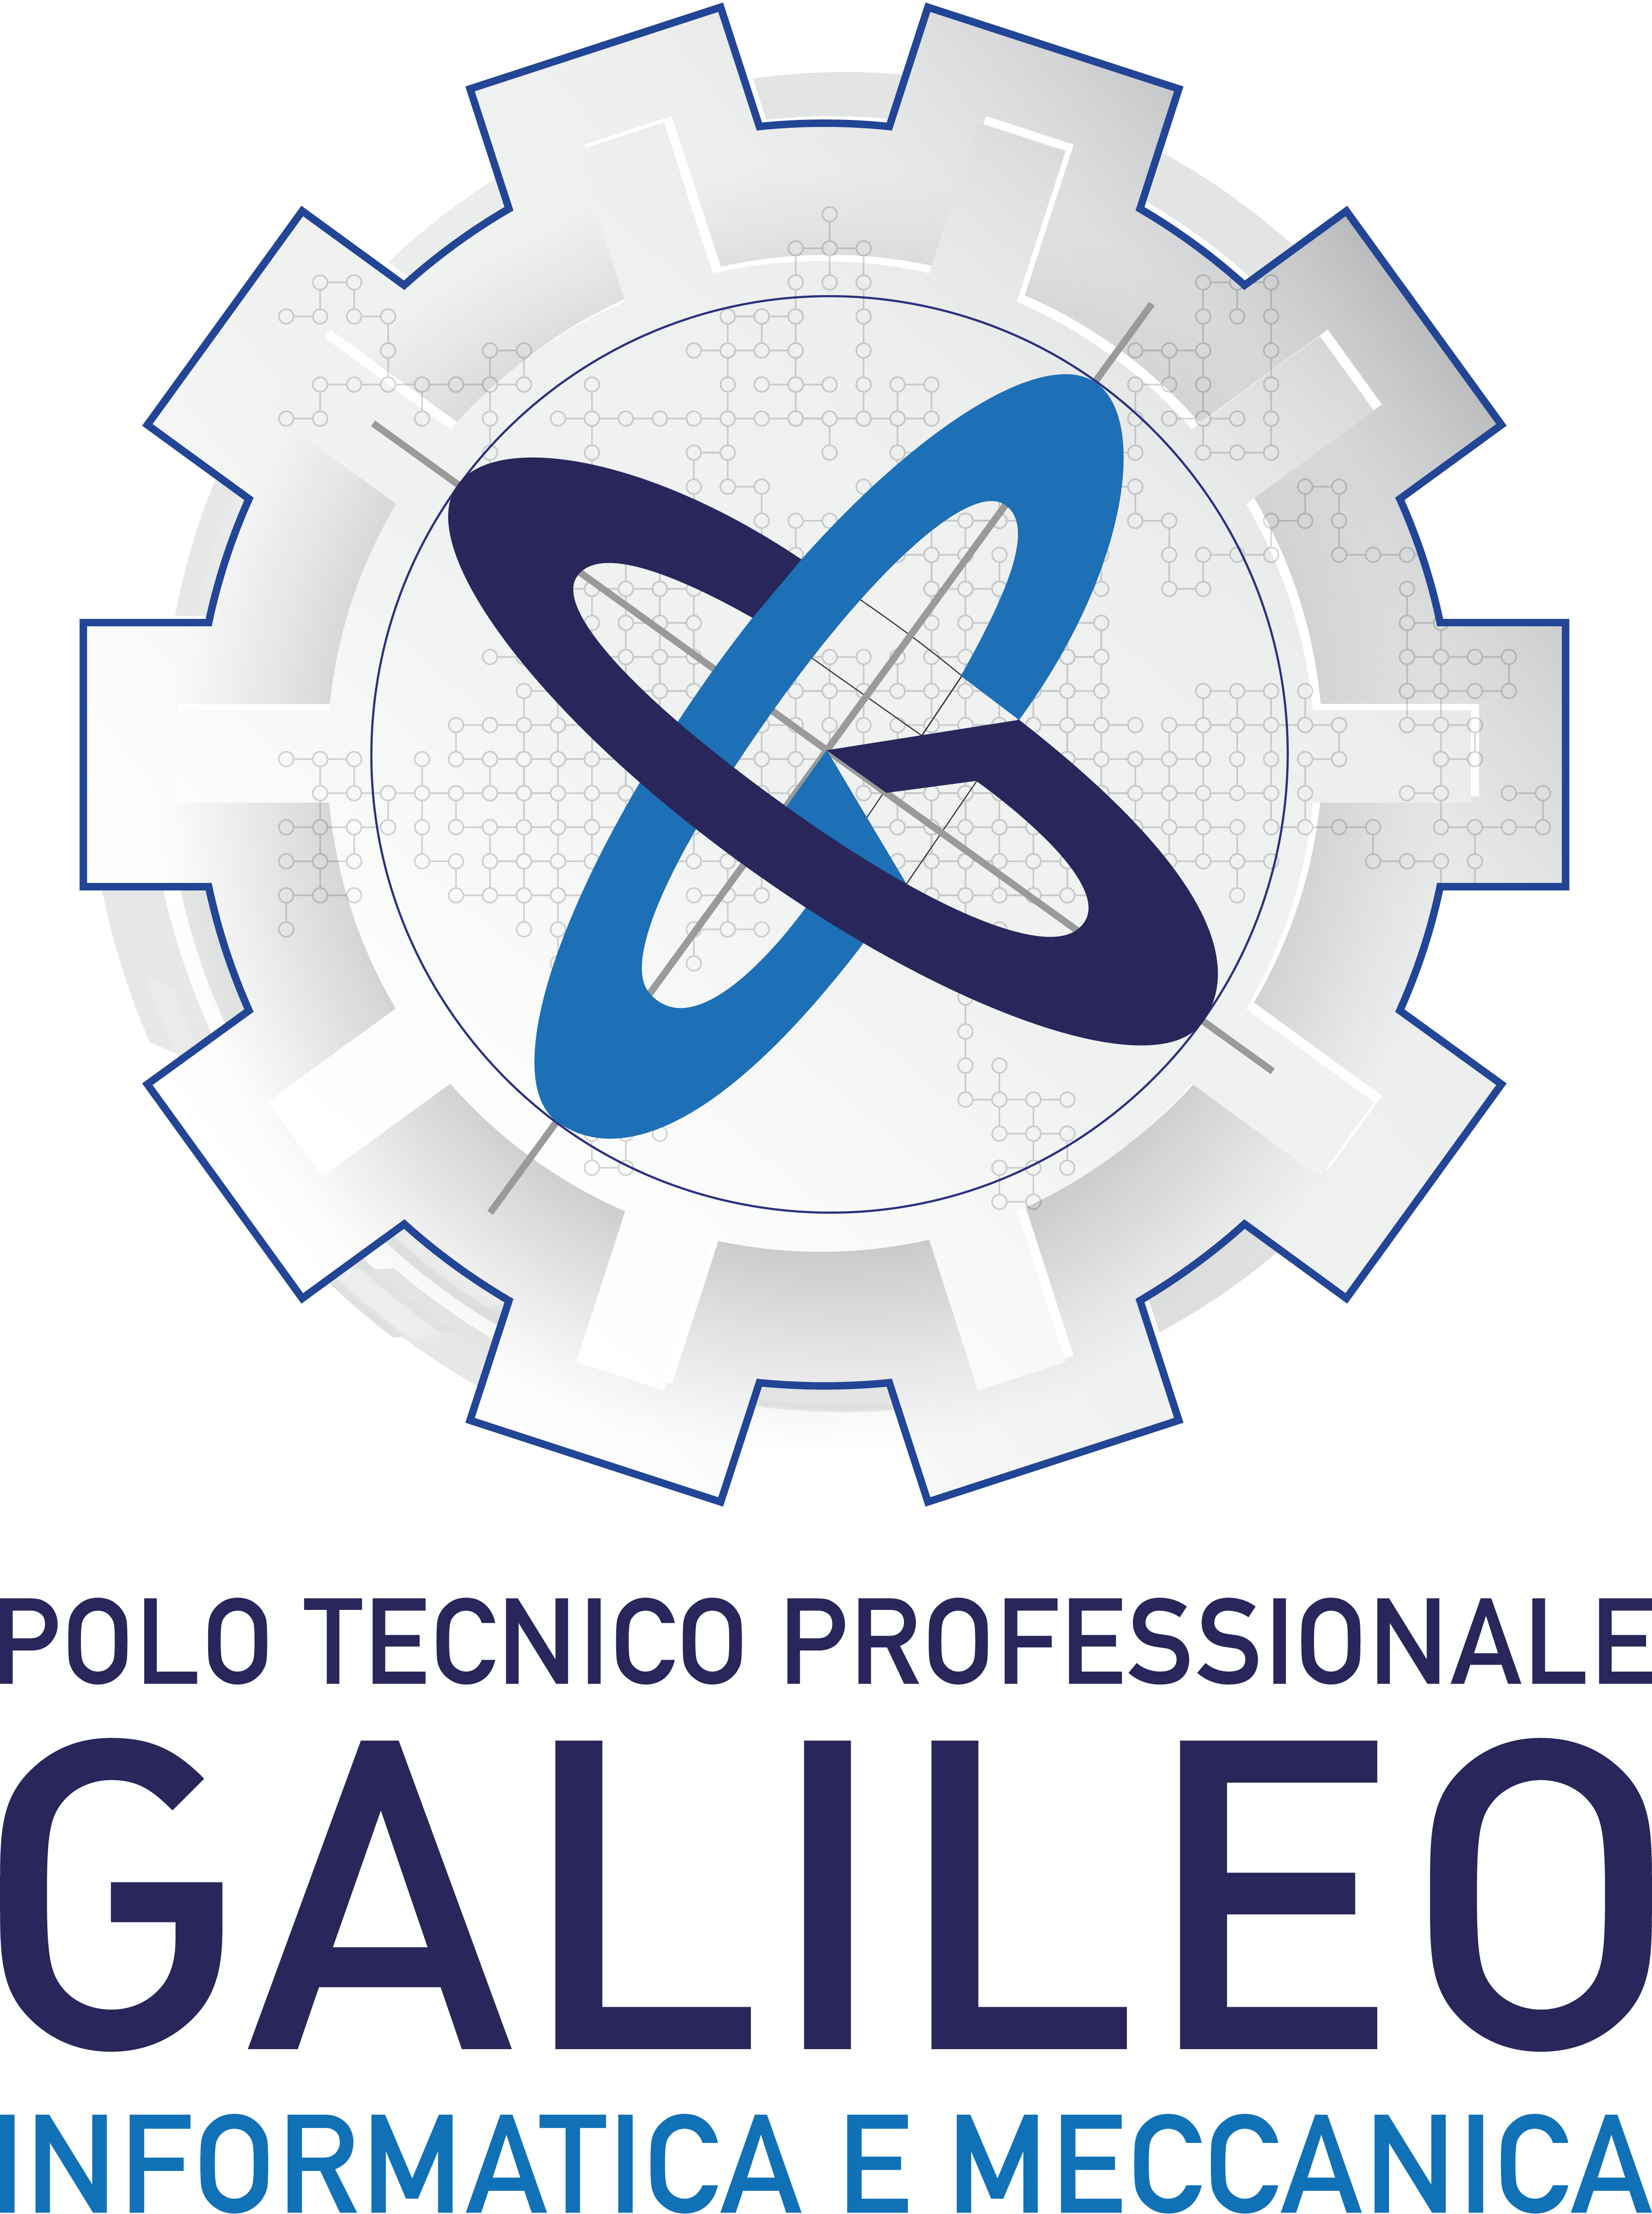 Polo tecnico Galilei